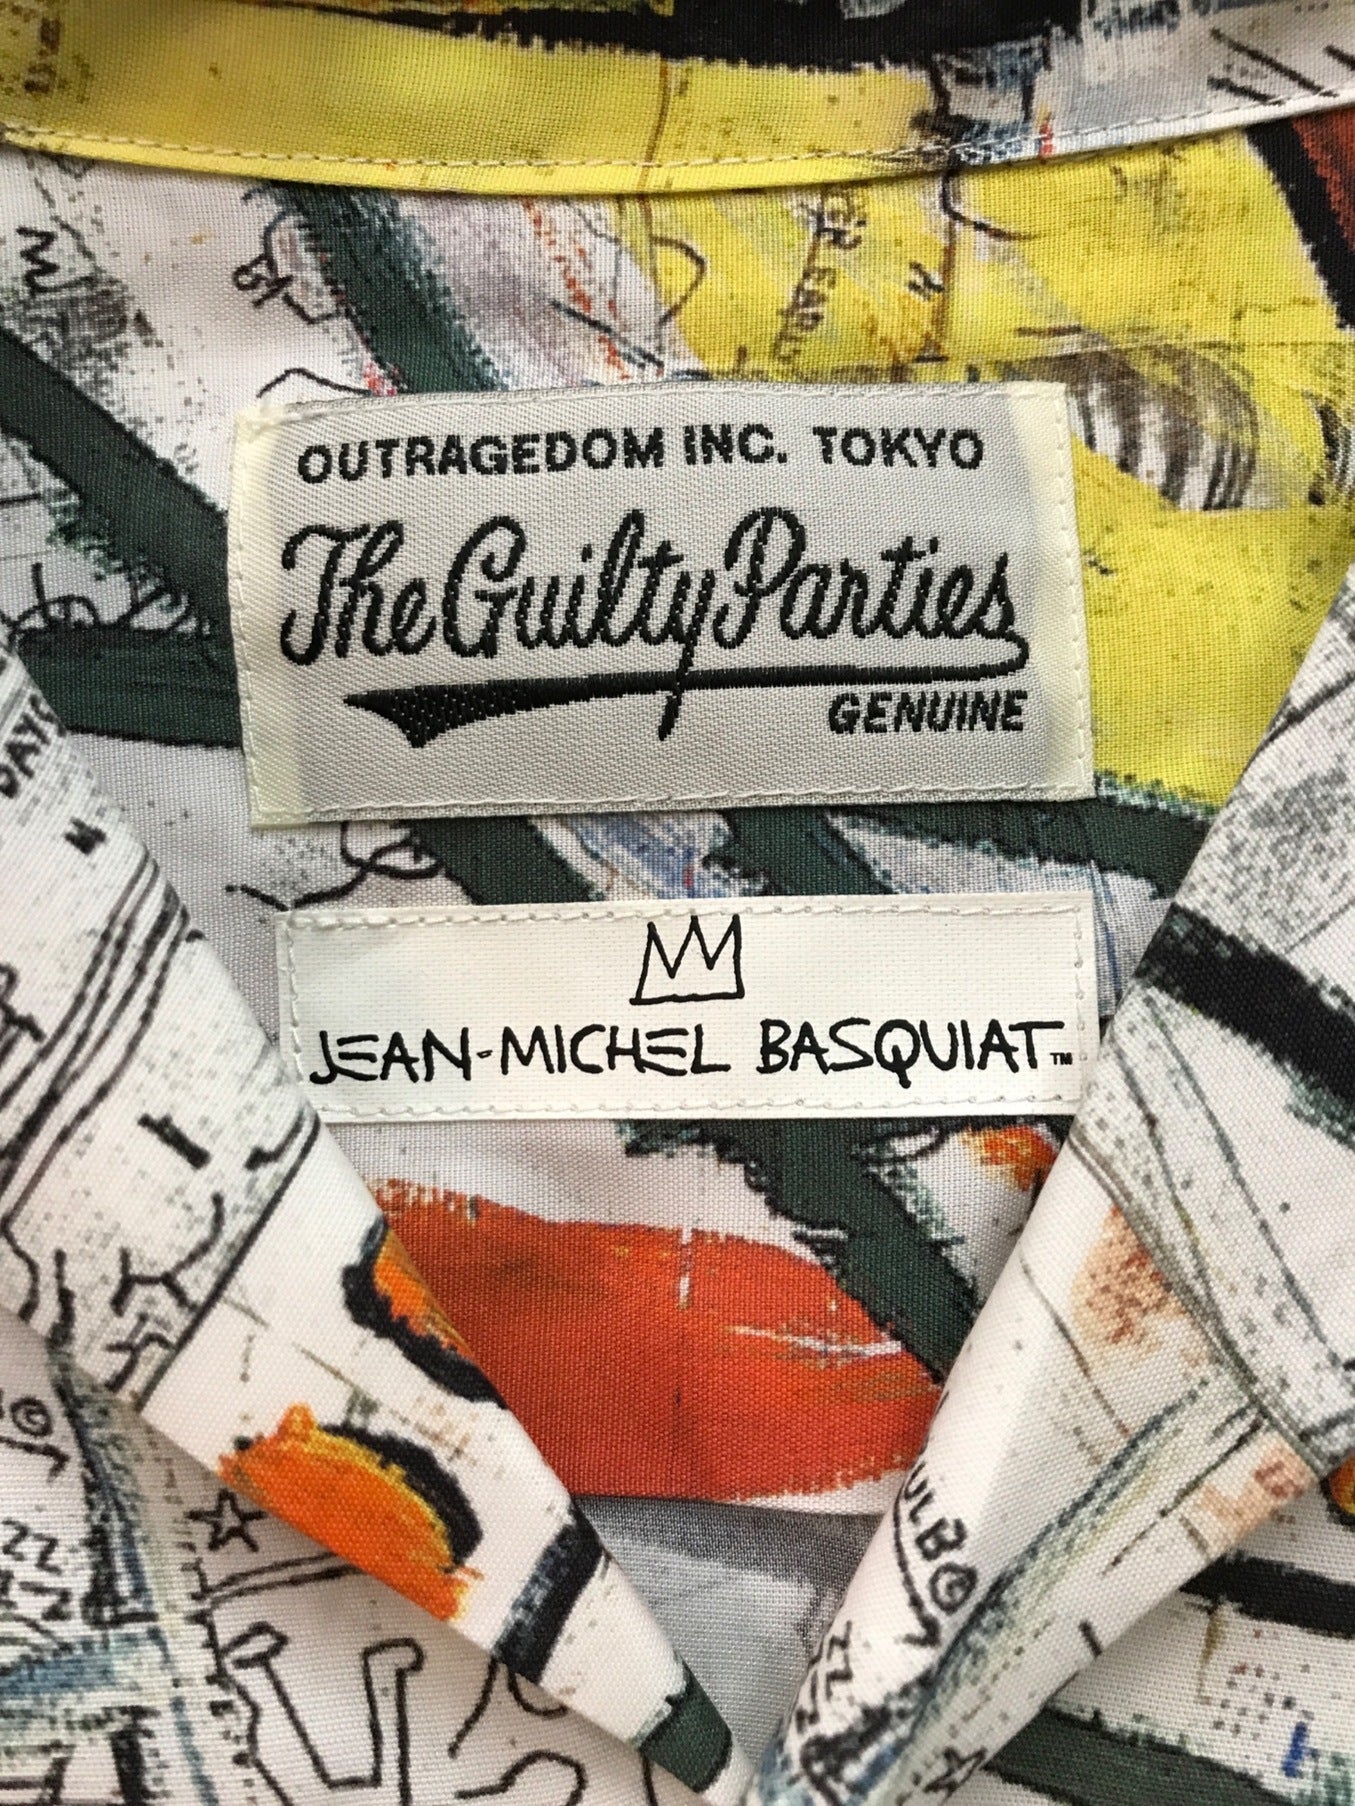 Wacko Maria Aloha 셔츠 Jean-Michel Basquiat